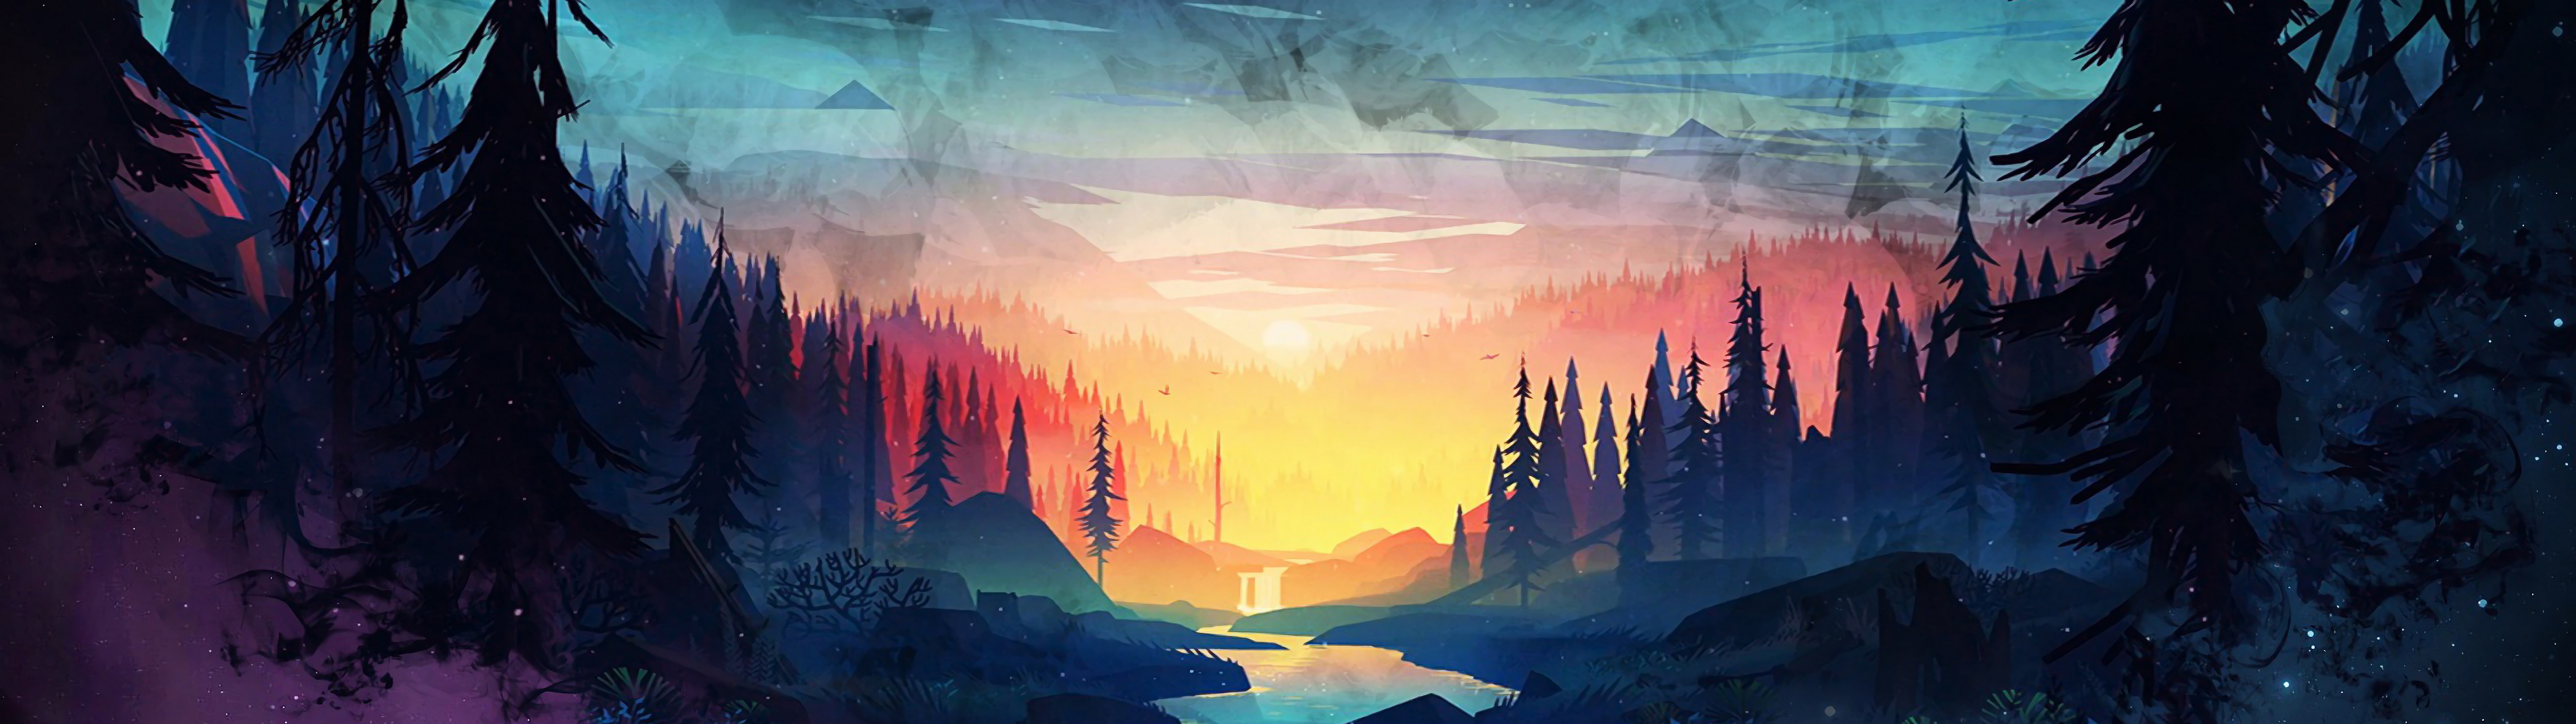 Sunrise In Forest Landscape Illustrate Wallpapers